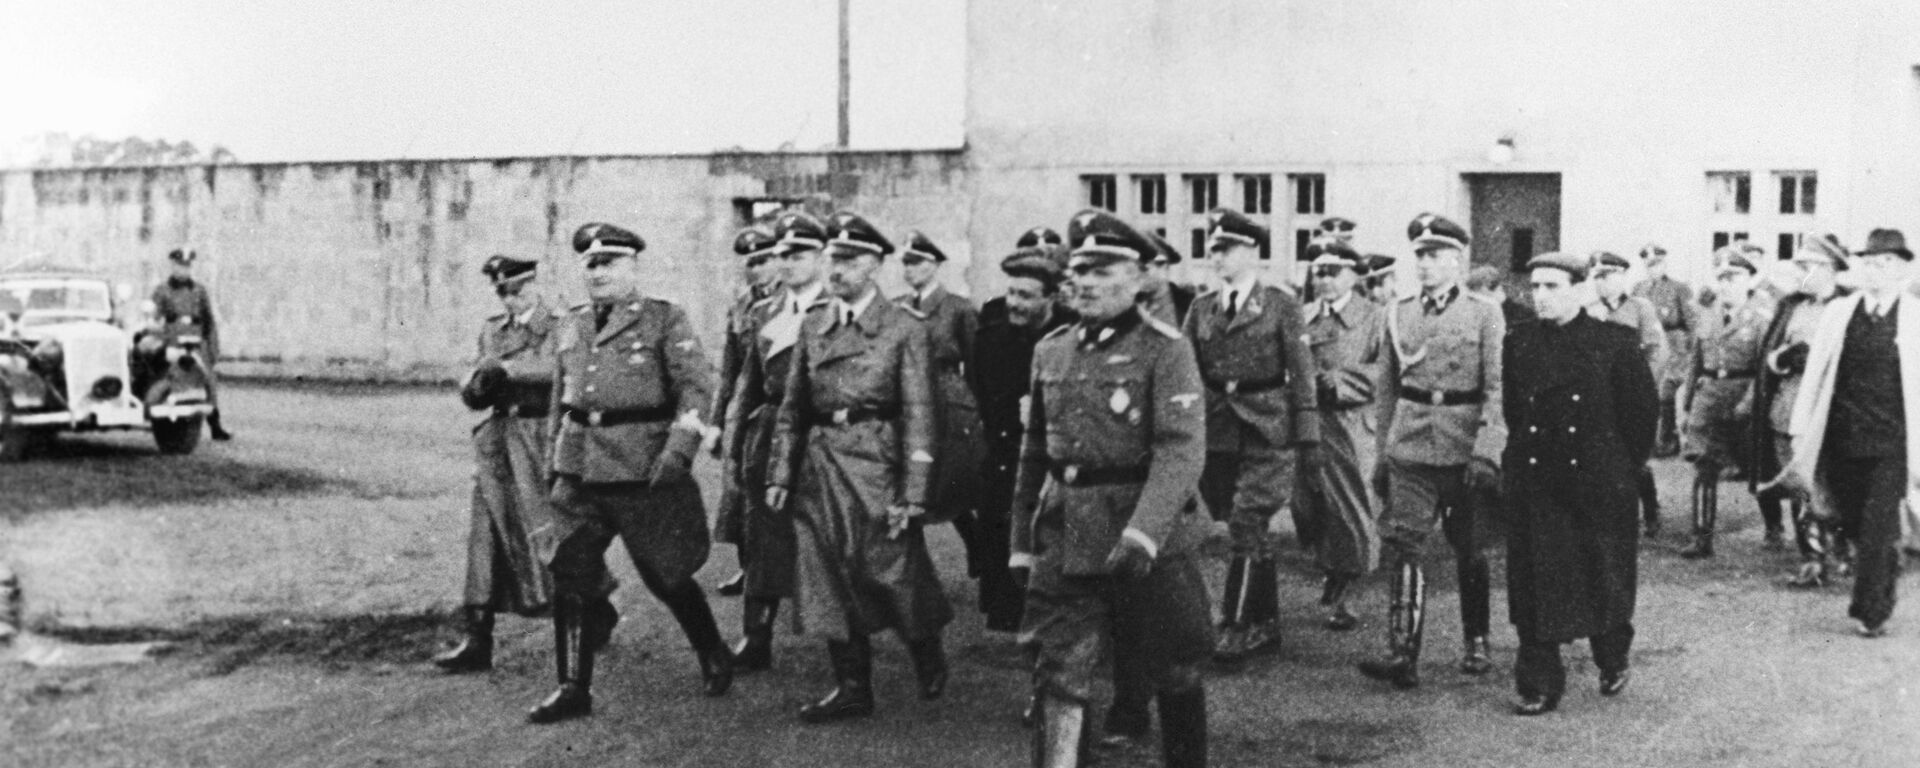 Campo de concentración de Sachsenhausen, Alemania, 1940 - Sputnik Mundo, 1920, 08.05.2018